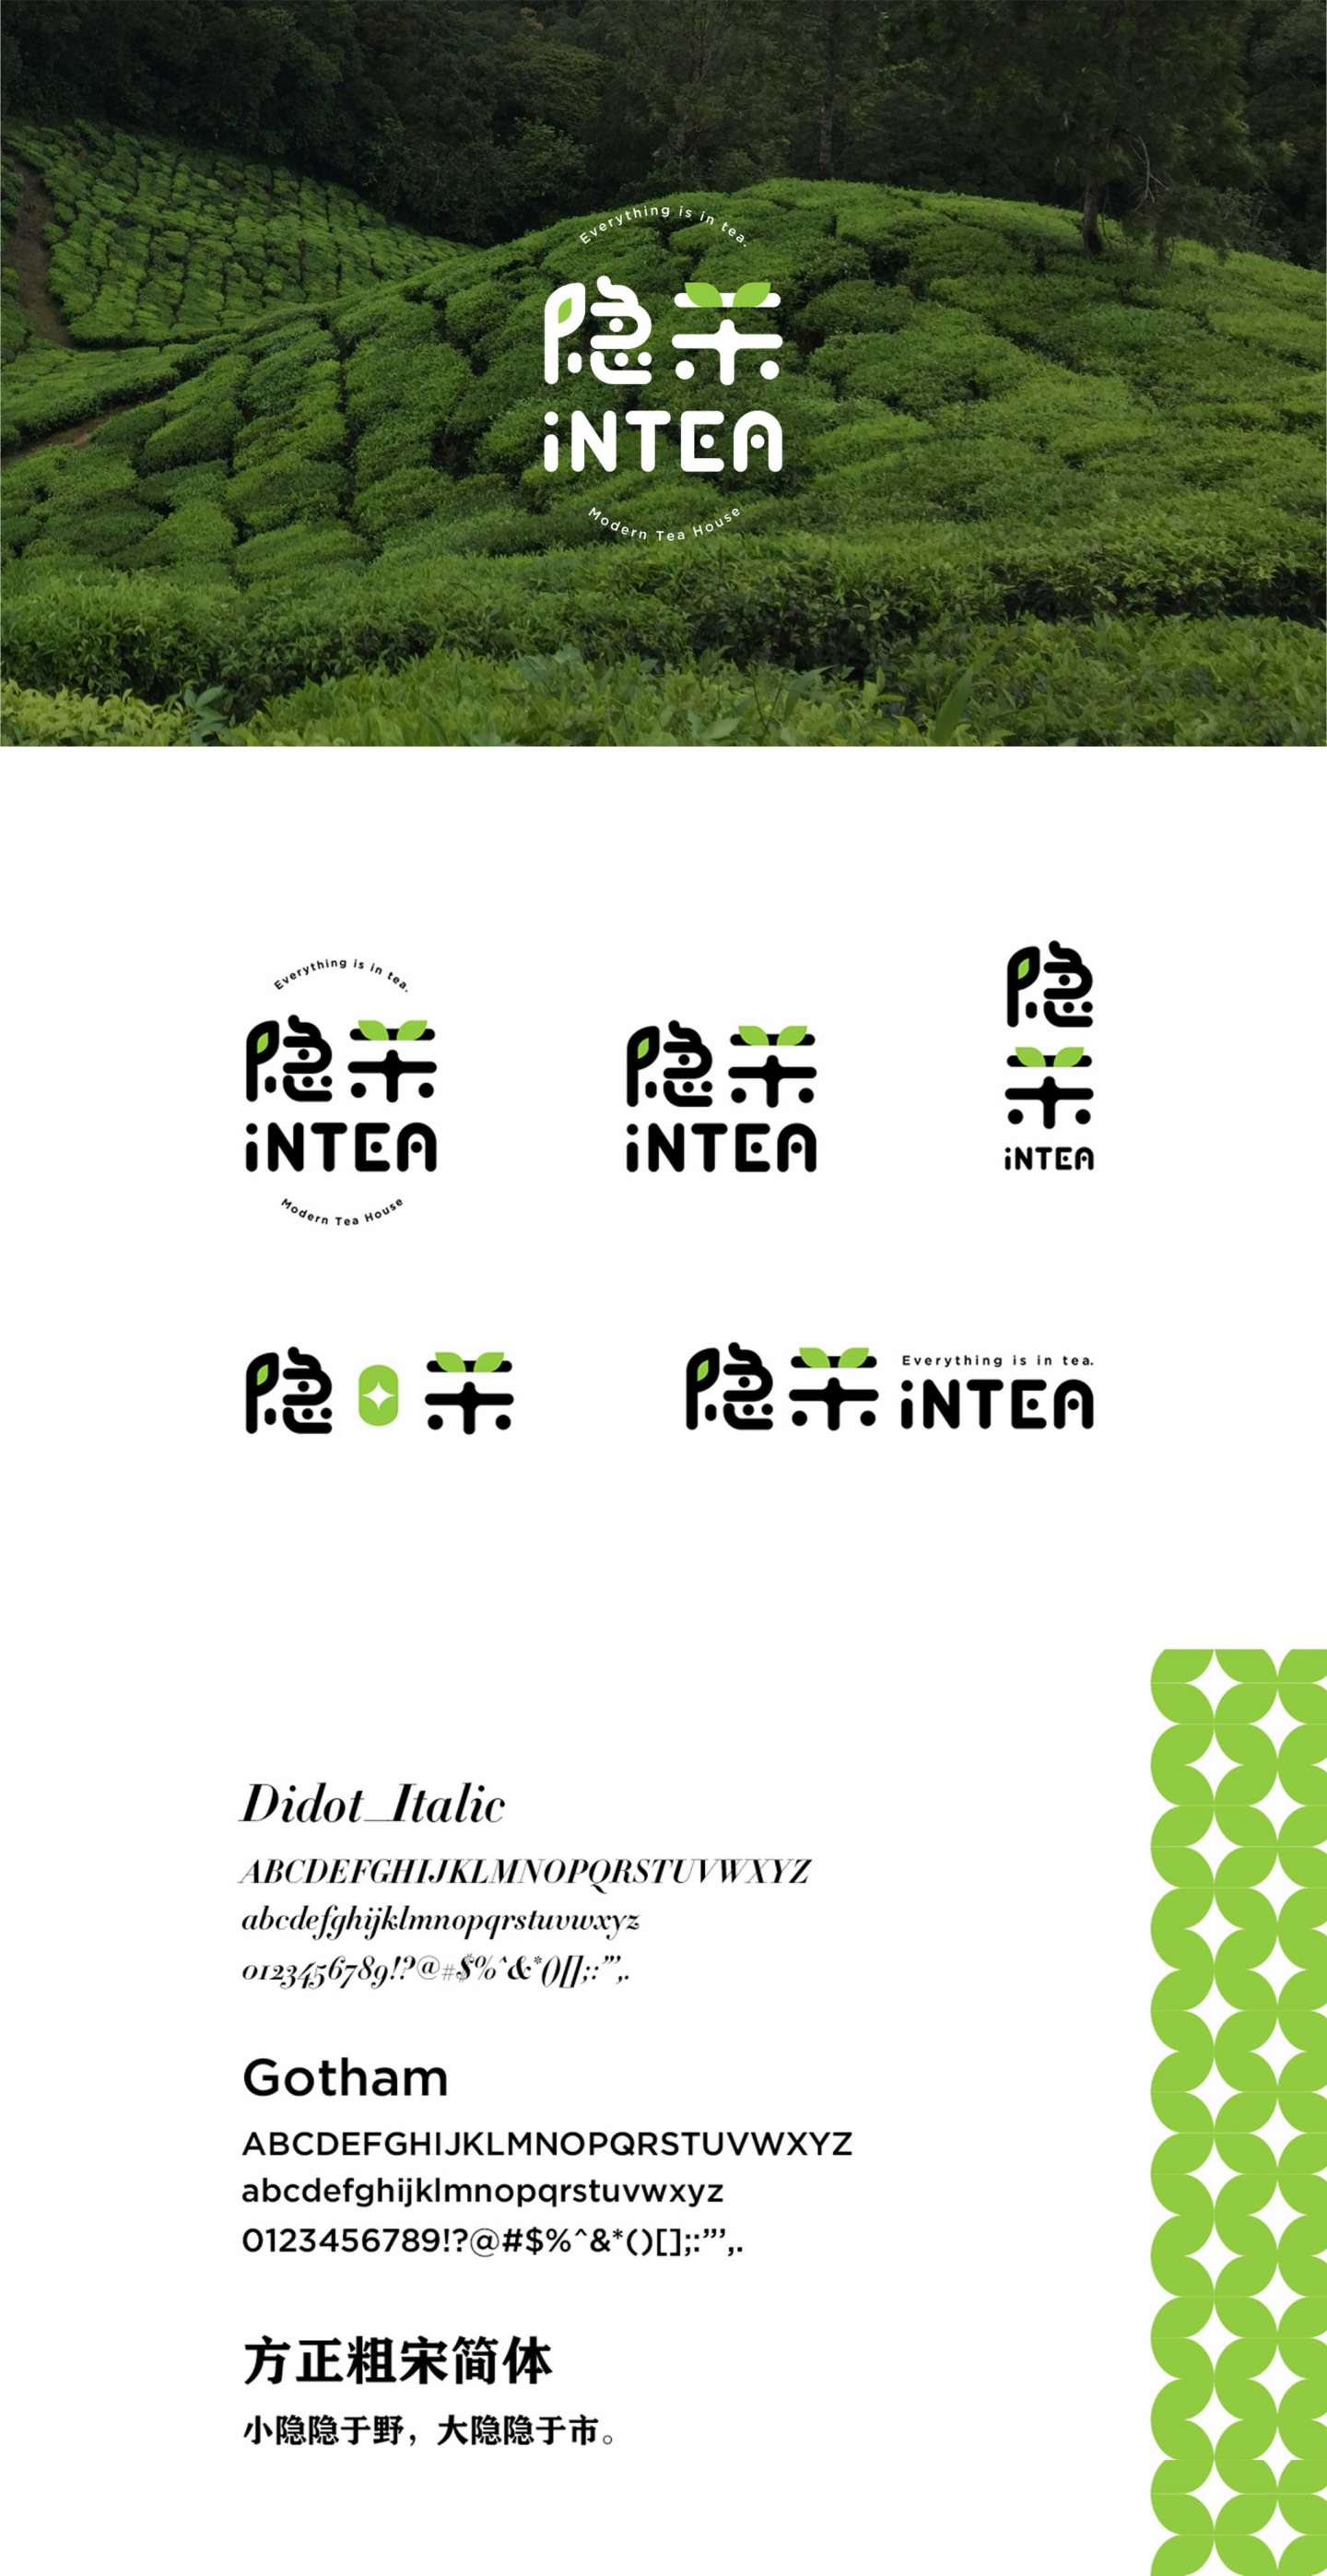 INTEA - Teahouse Branding